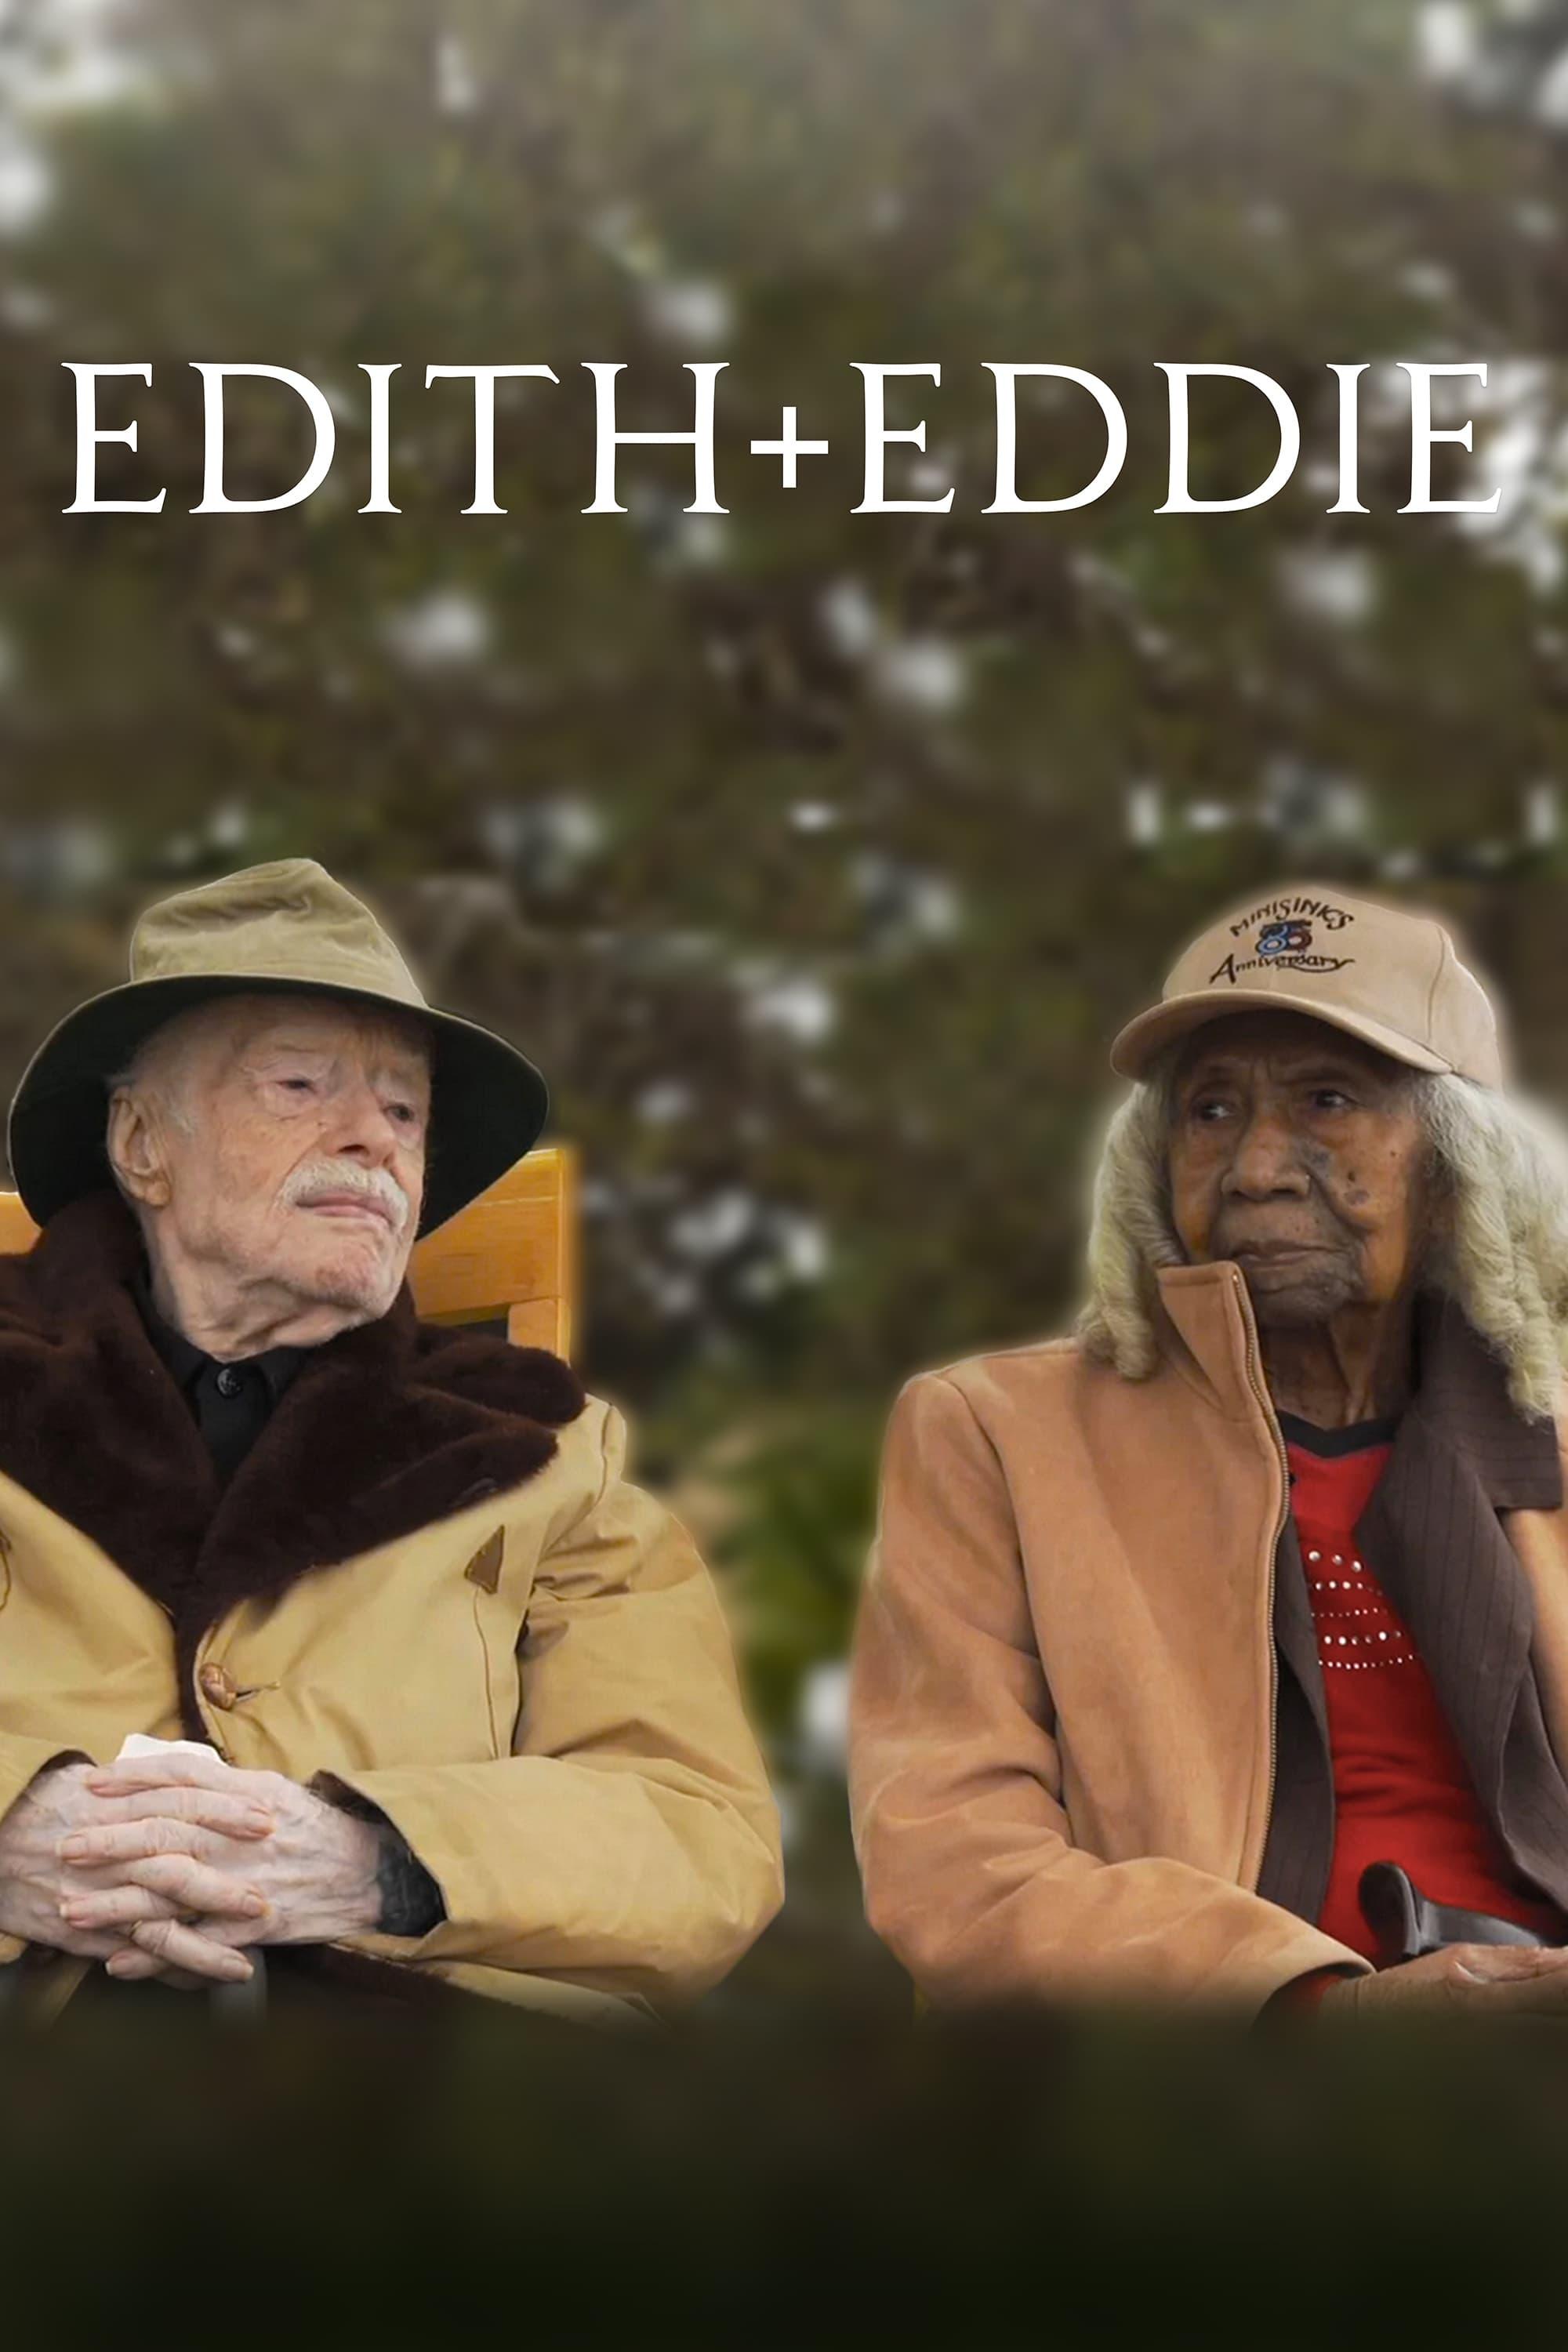 Edith+Eddie poster